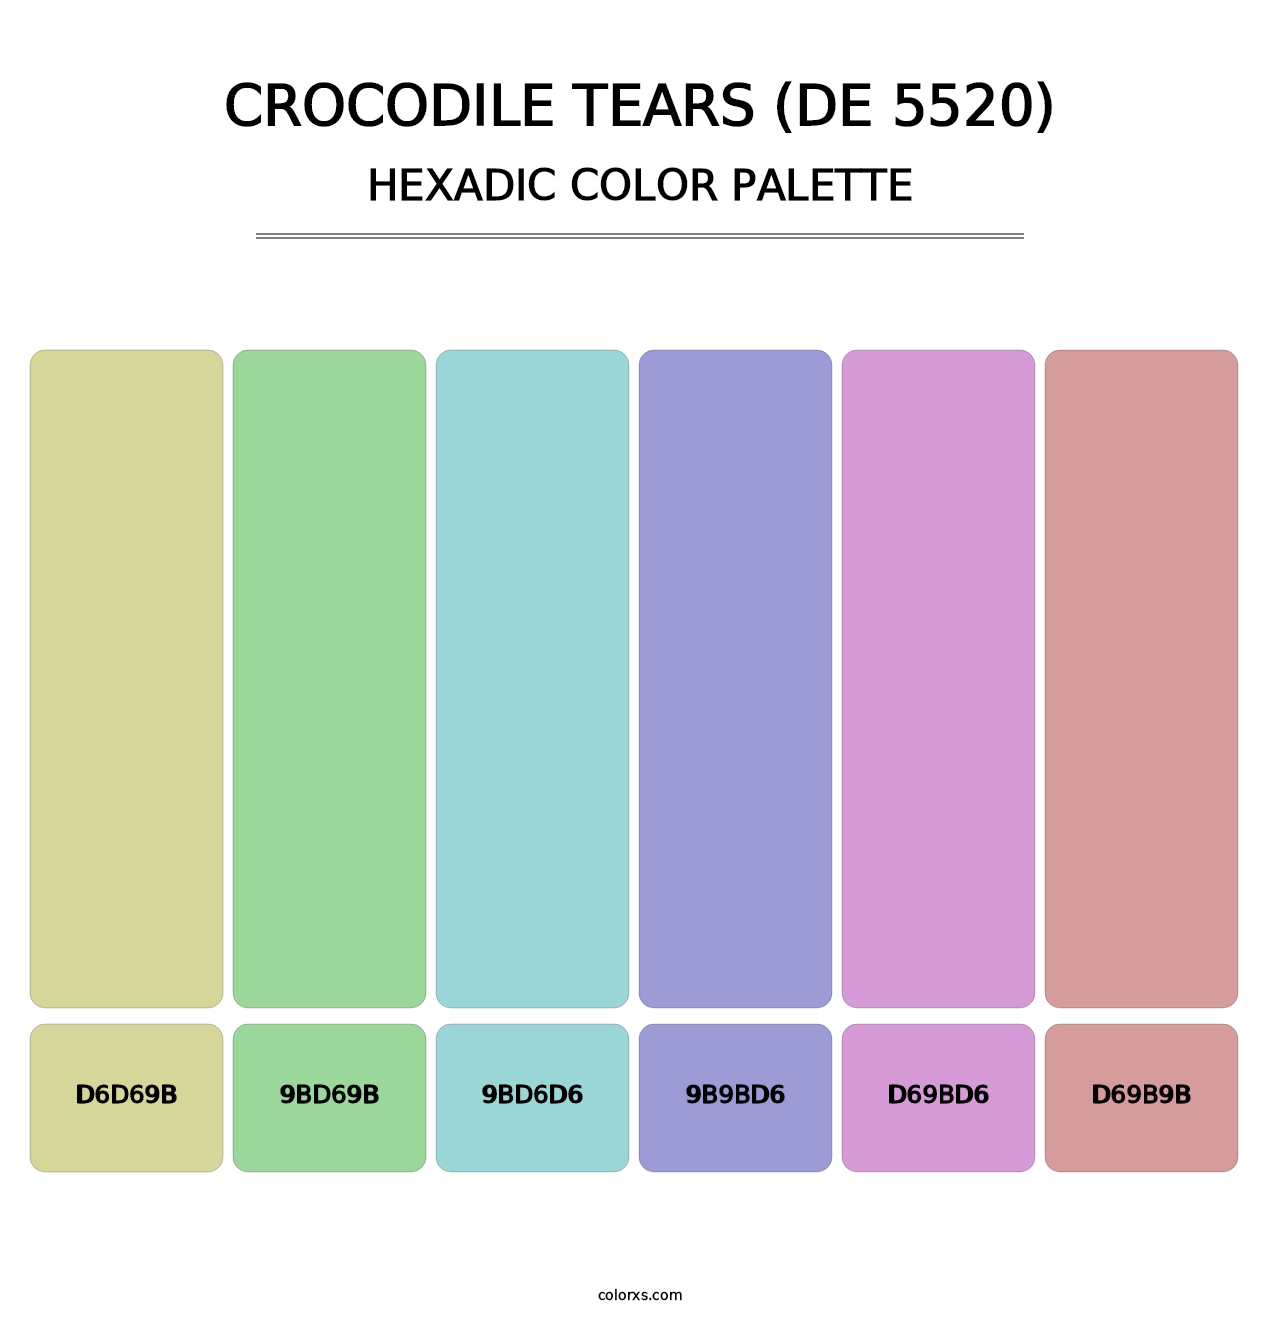 Crocodile Tears (DE 5520) - Hexadic Color Palette